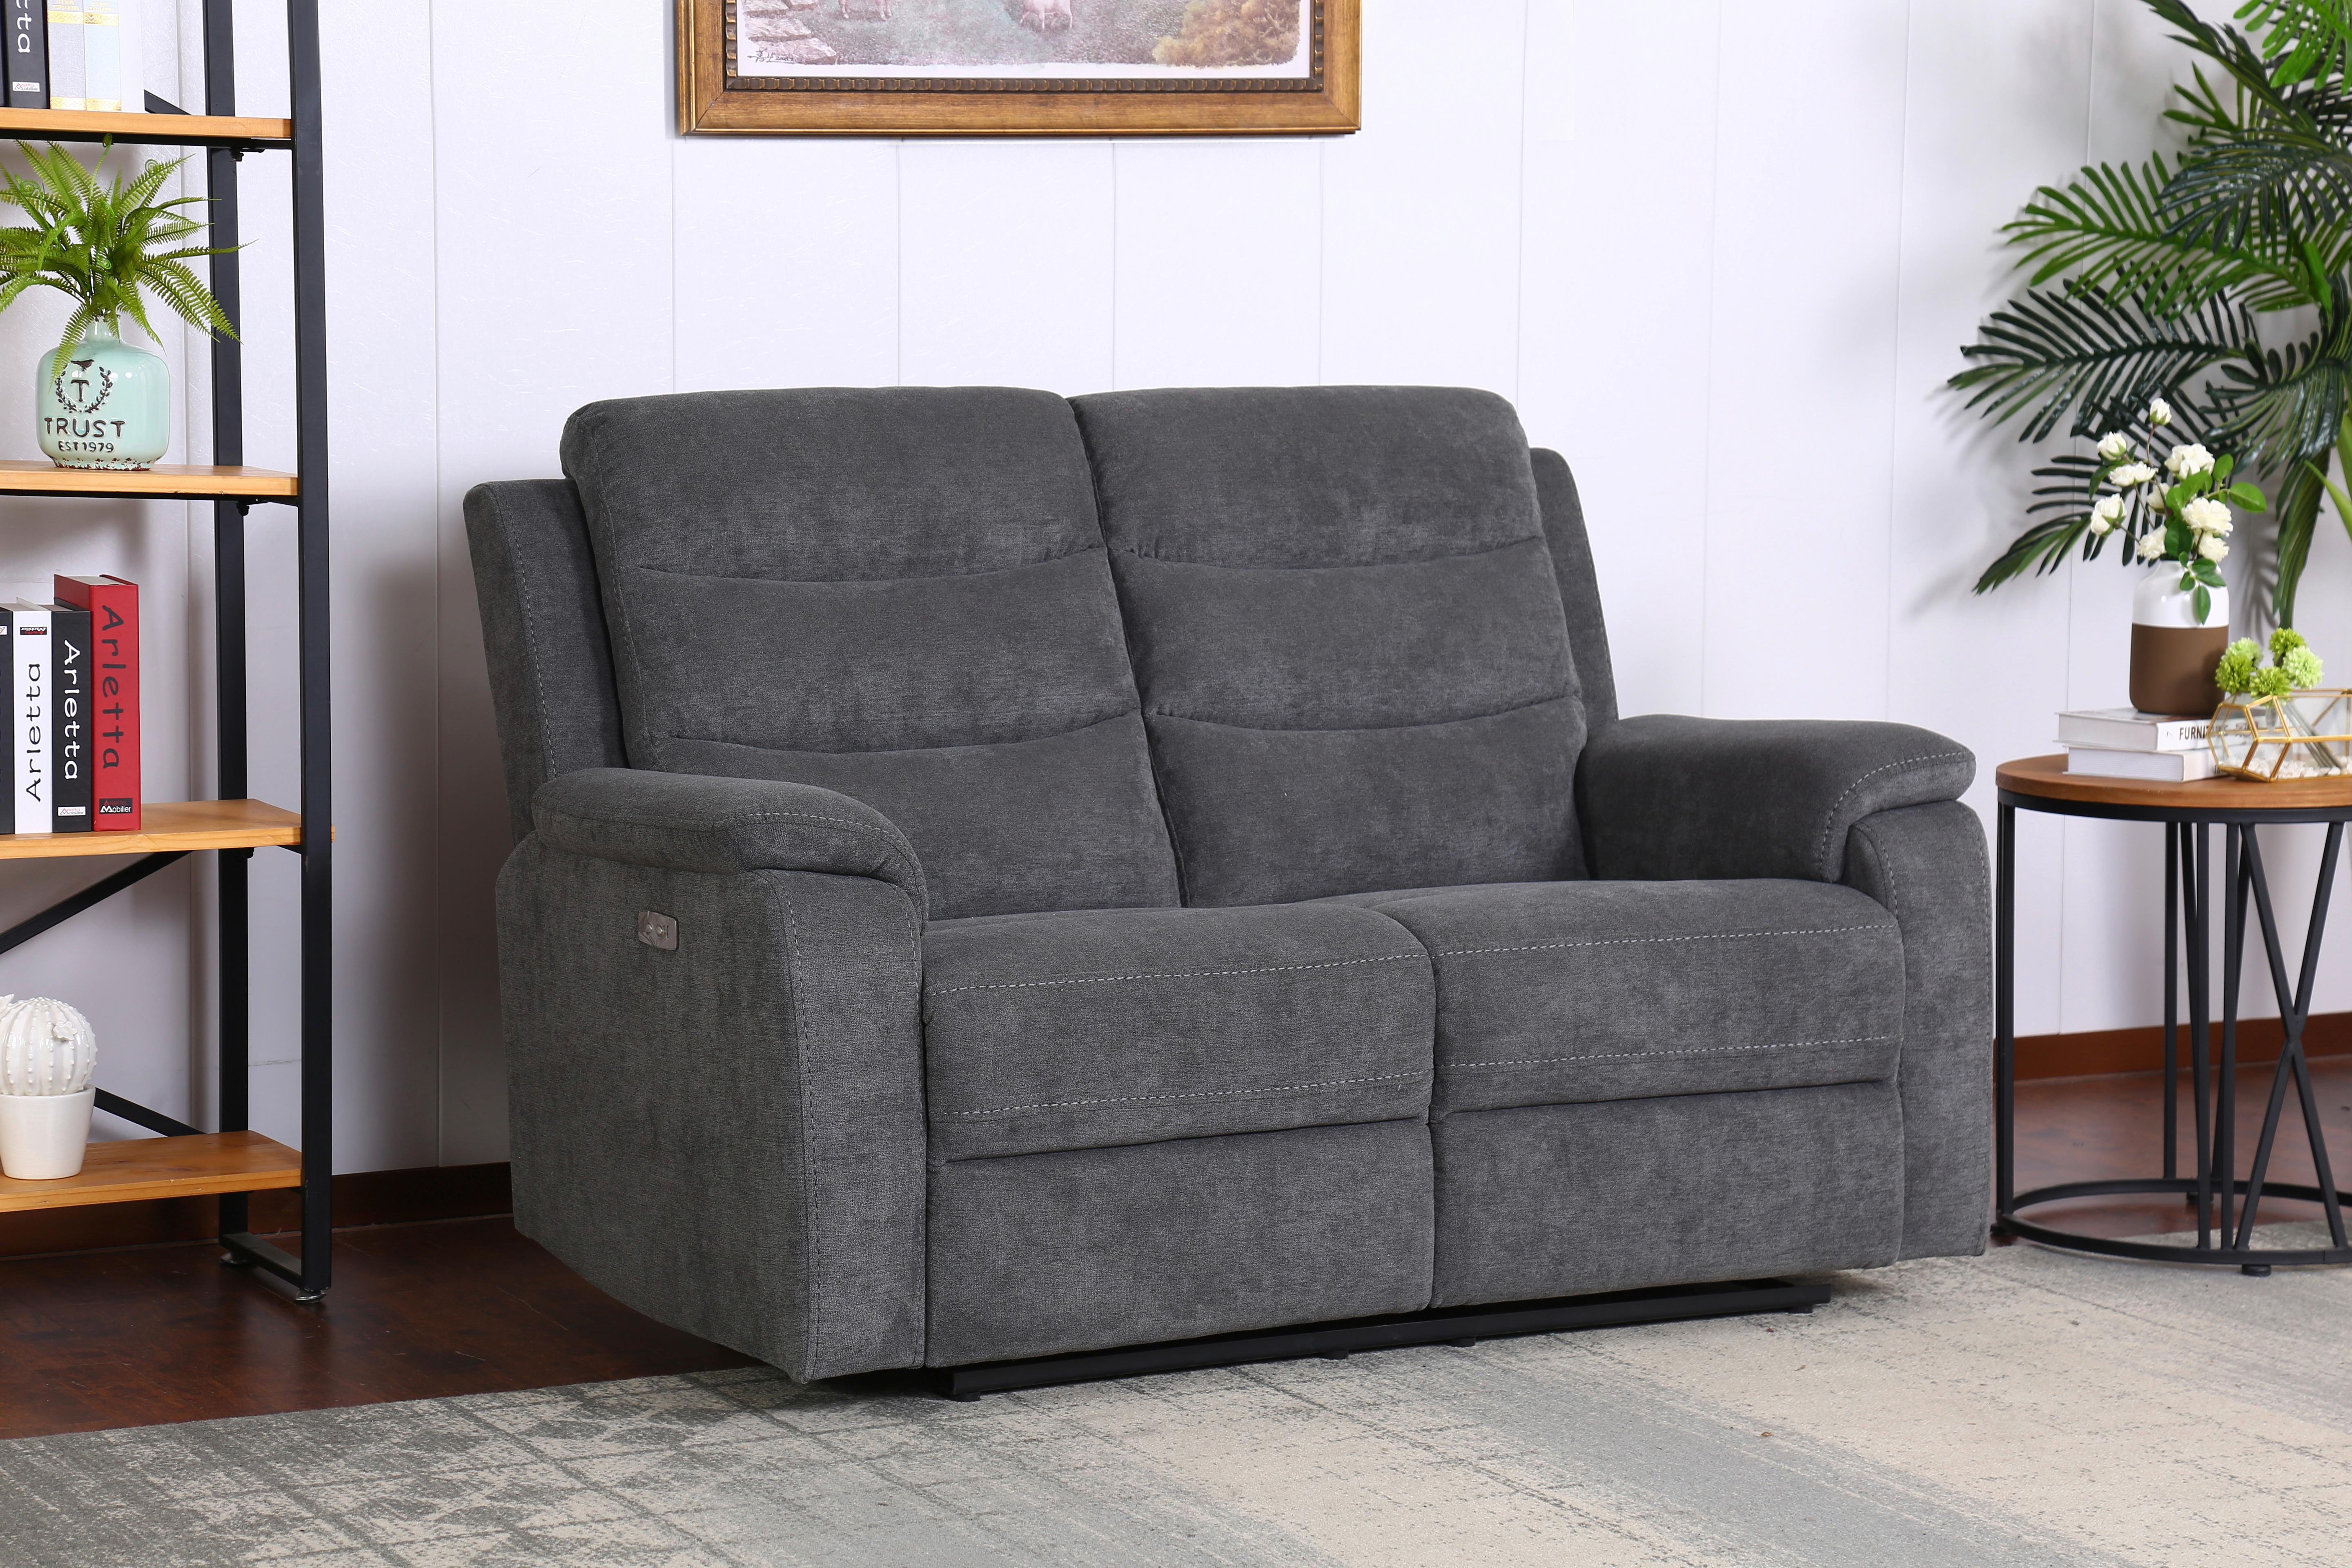 2-Sitzer-Sofa + Relaxfunktion Manchester Grau - Schwarz/Grau, KONVENTIONELL, Holz/Textil (153/102/93cm) - Ondega